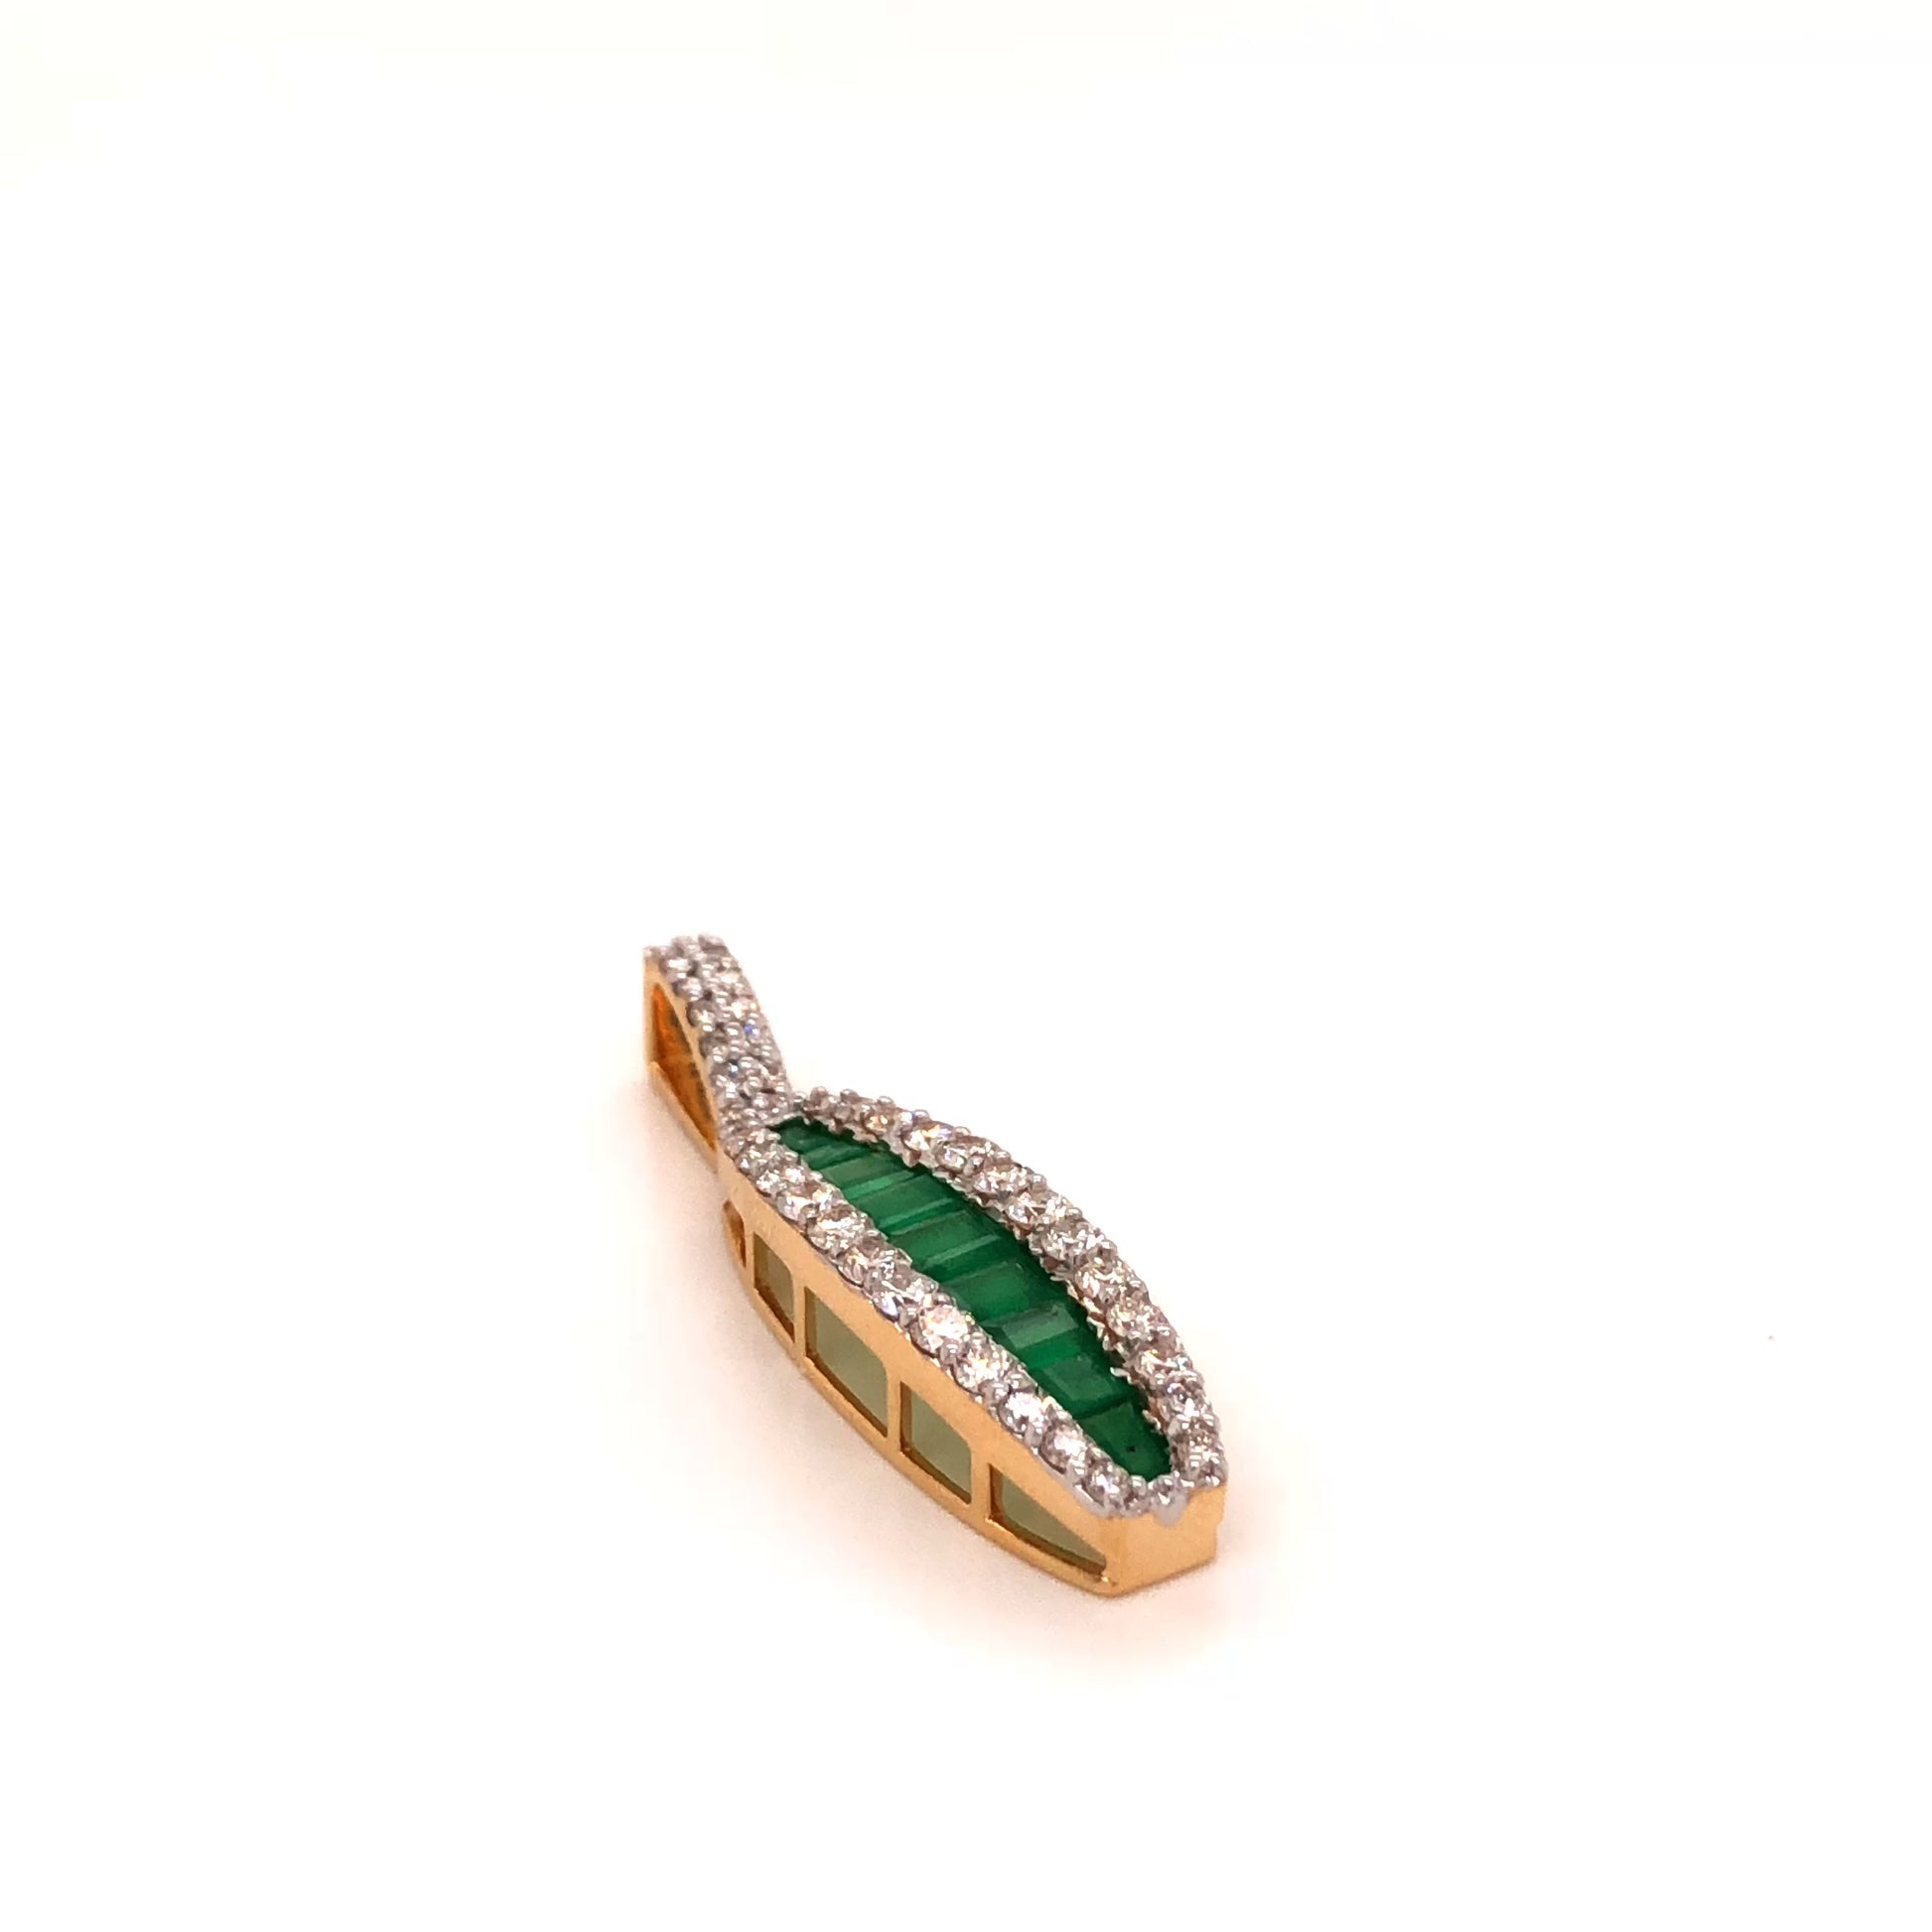 Emerald gemstone pendant